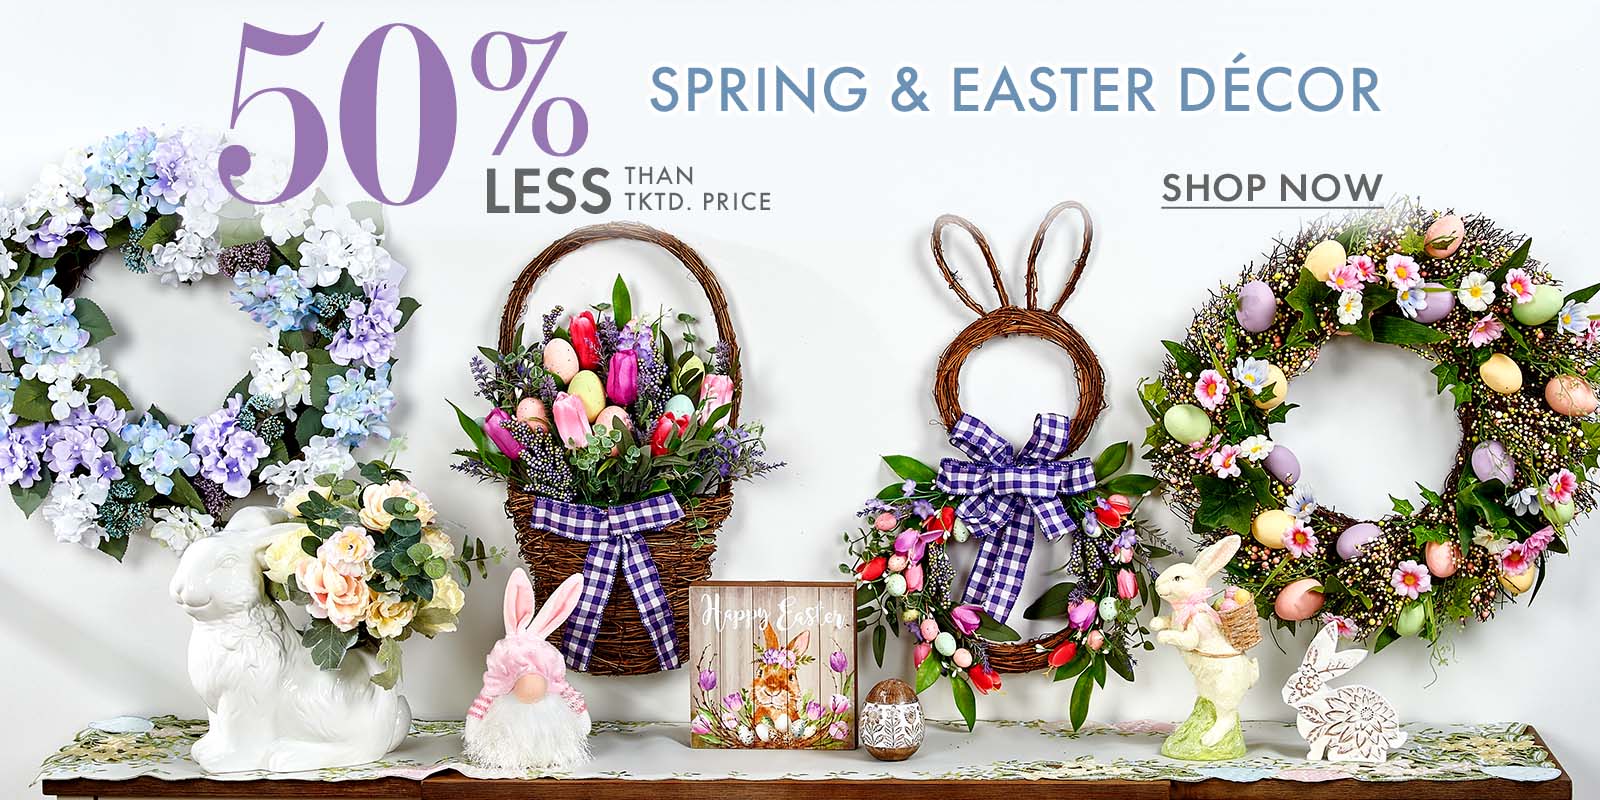 Shop 50% less than Spring & Easter Decor